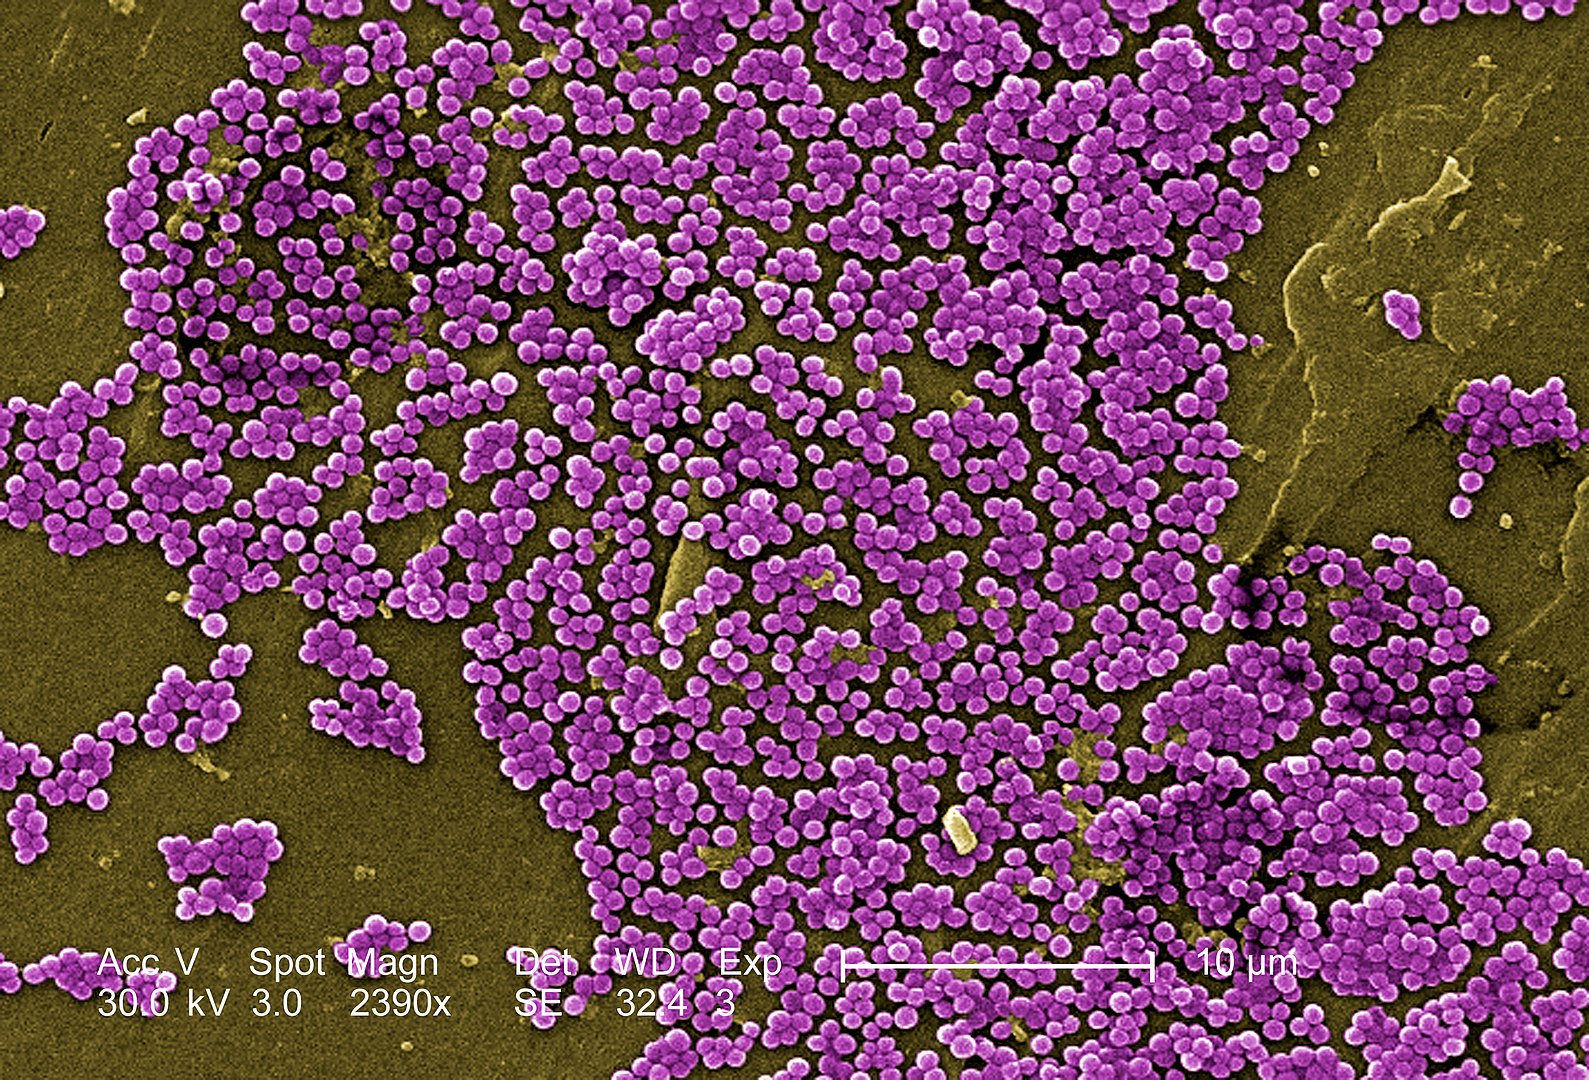 Methicillin-resistant Staphylococcus aureus (MRSA) have had their antibiotic resistance reversed in Prof. Almqvist's lab. Image credit - Pixnio/ Janice Haney Carr, Jeff Hageman, M.H.S, USCDCP, licensed under CC0